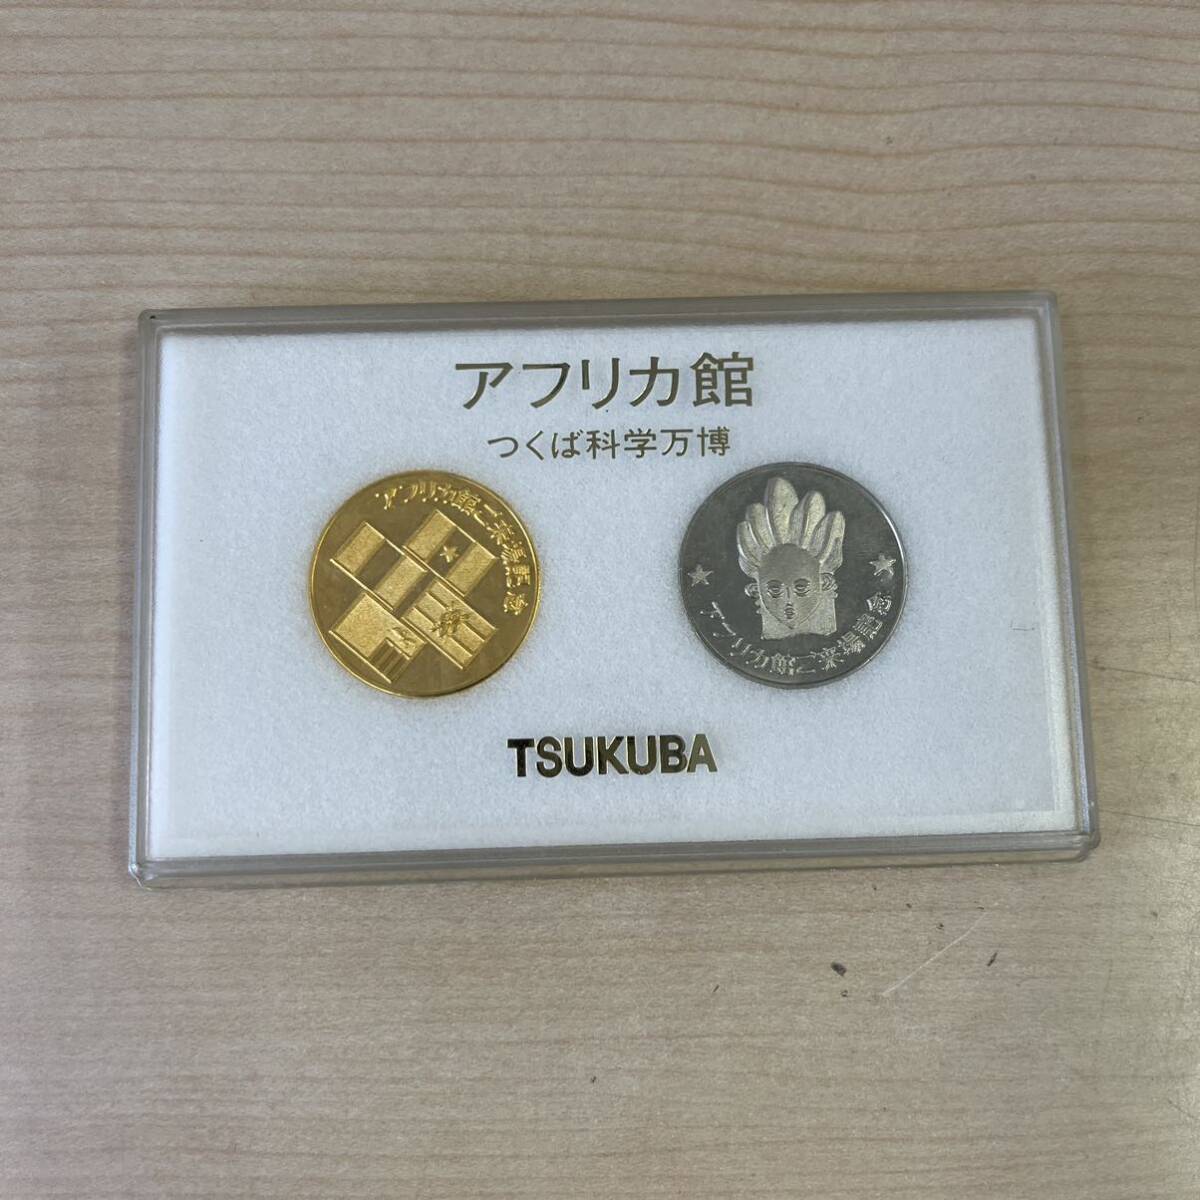 【TM0414】つくば科学万博 TSUKUBA アフリカ館 ご来場記念 メダル 記念コイン 2枚 ケース入りの画像1